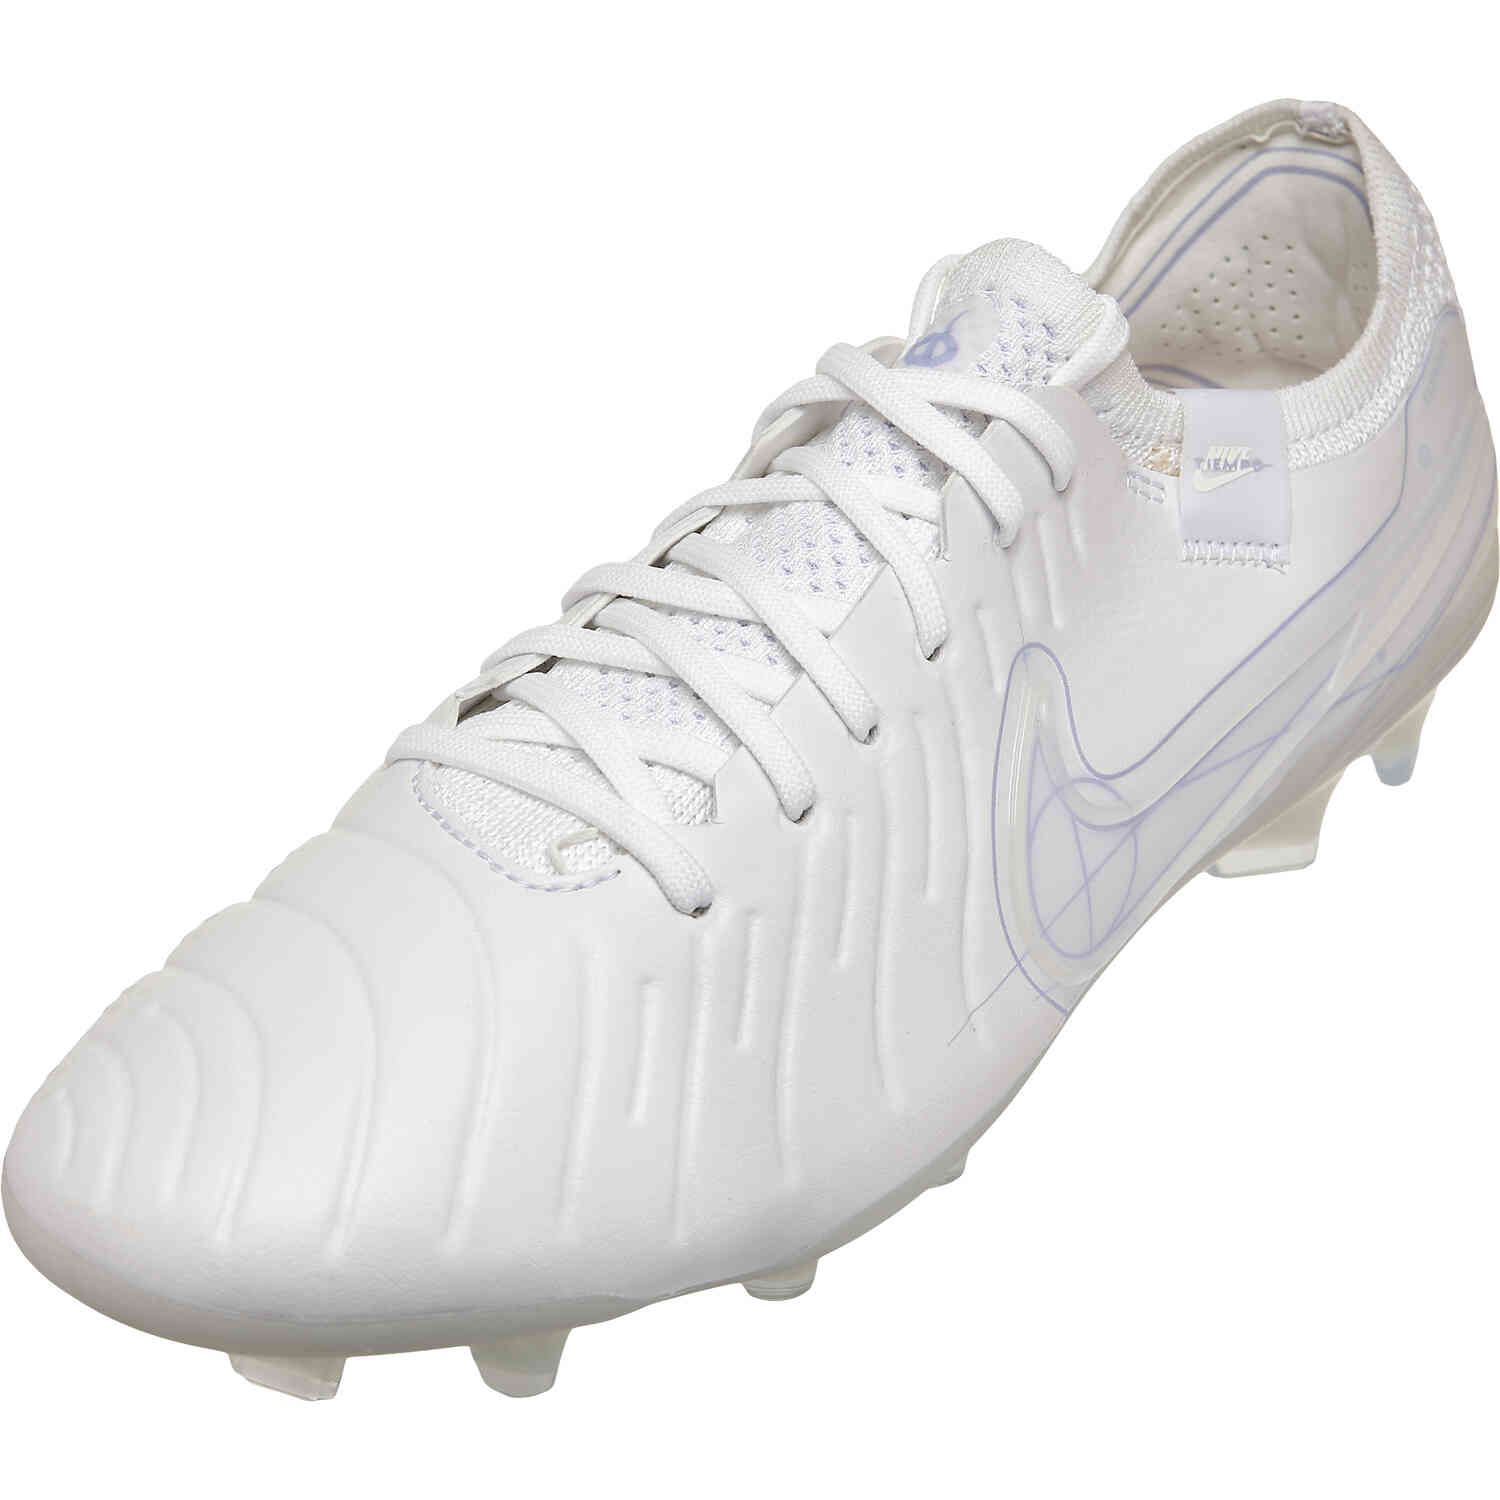 White Nike Soccer Shoes - SoccerPro